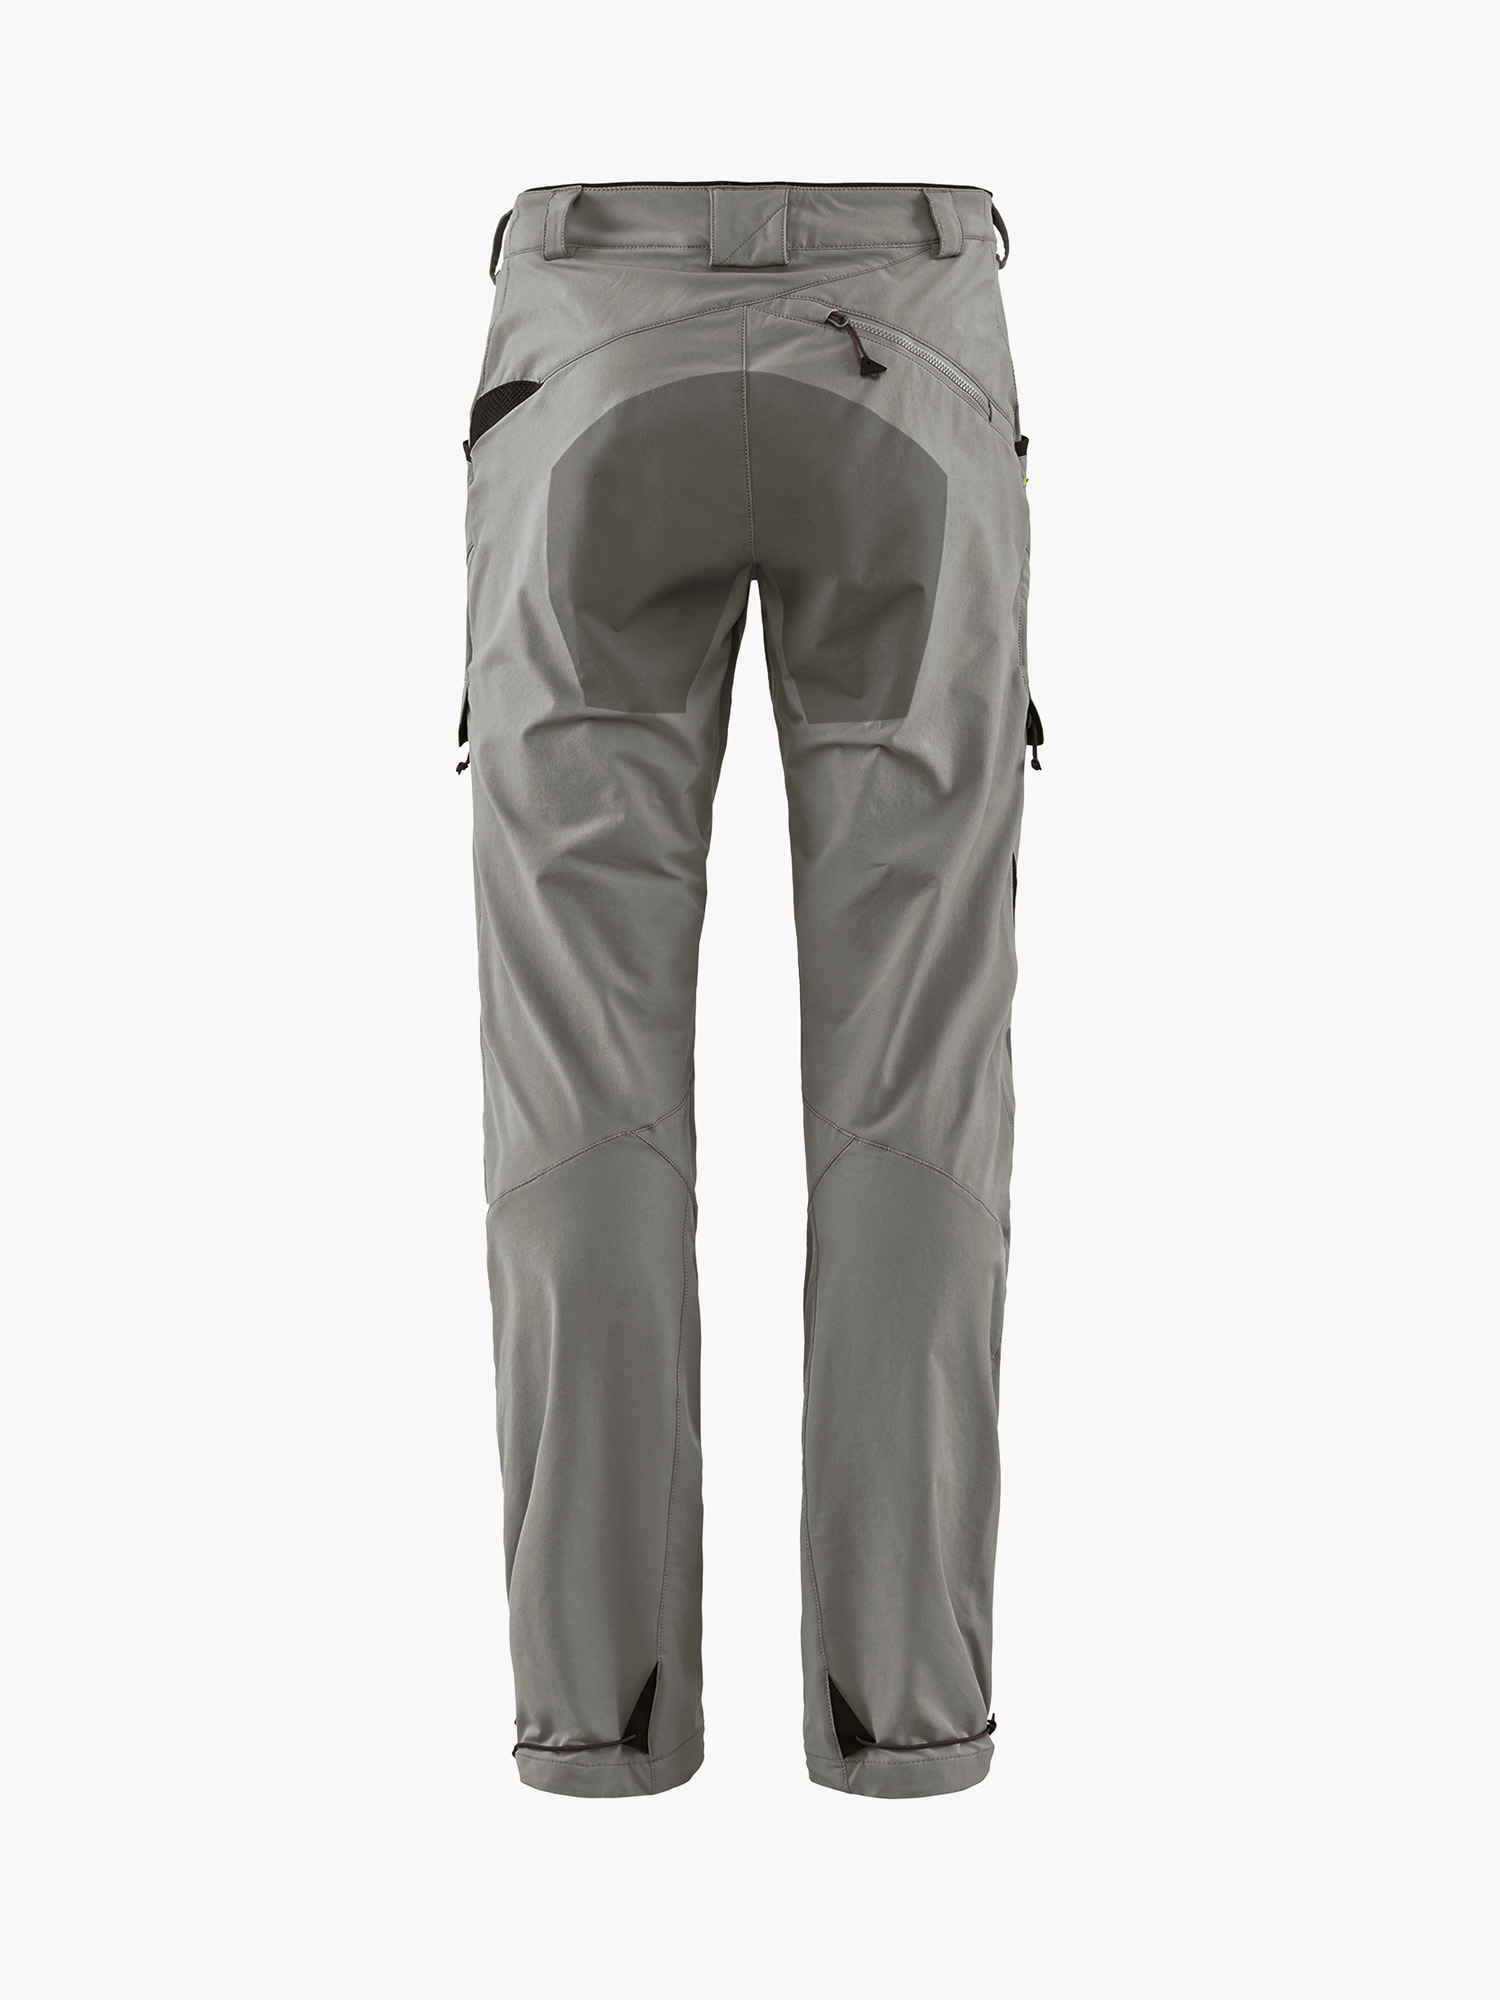 15571M91 - Misty 2.0 Pants M's - Granit Grey